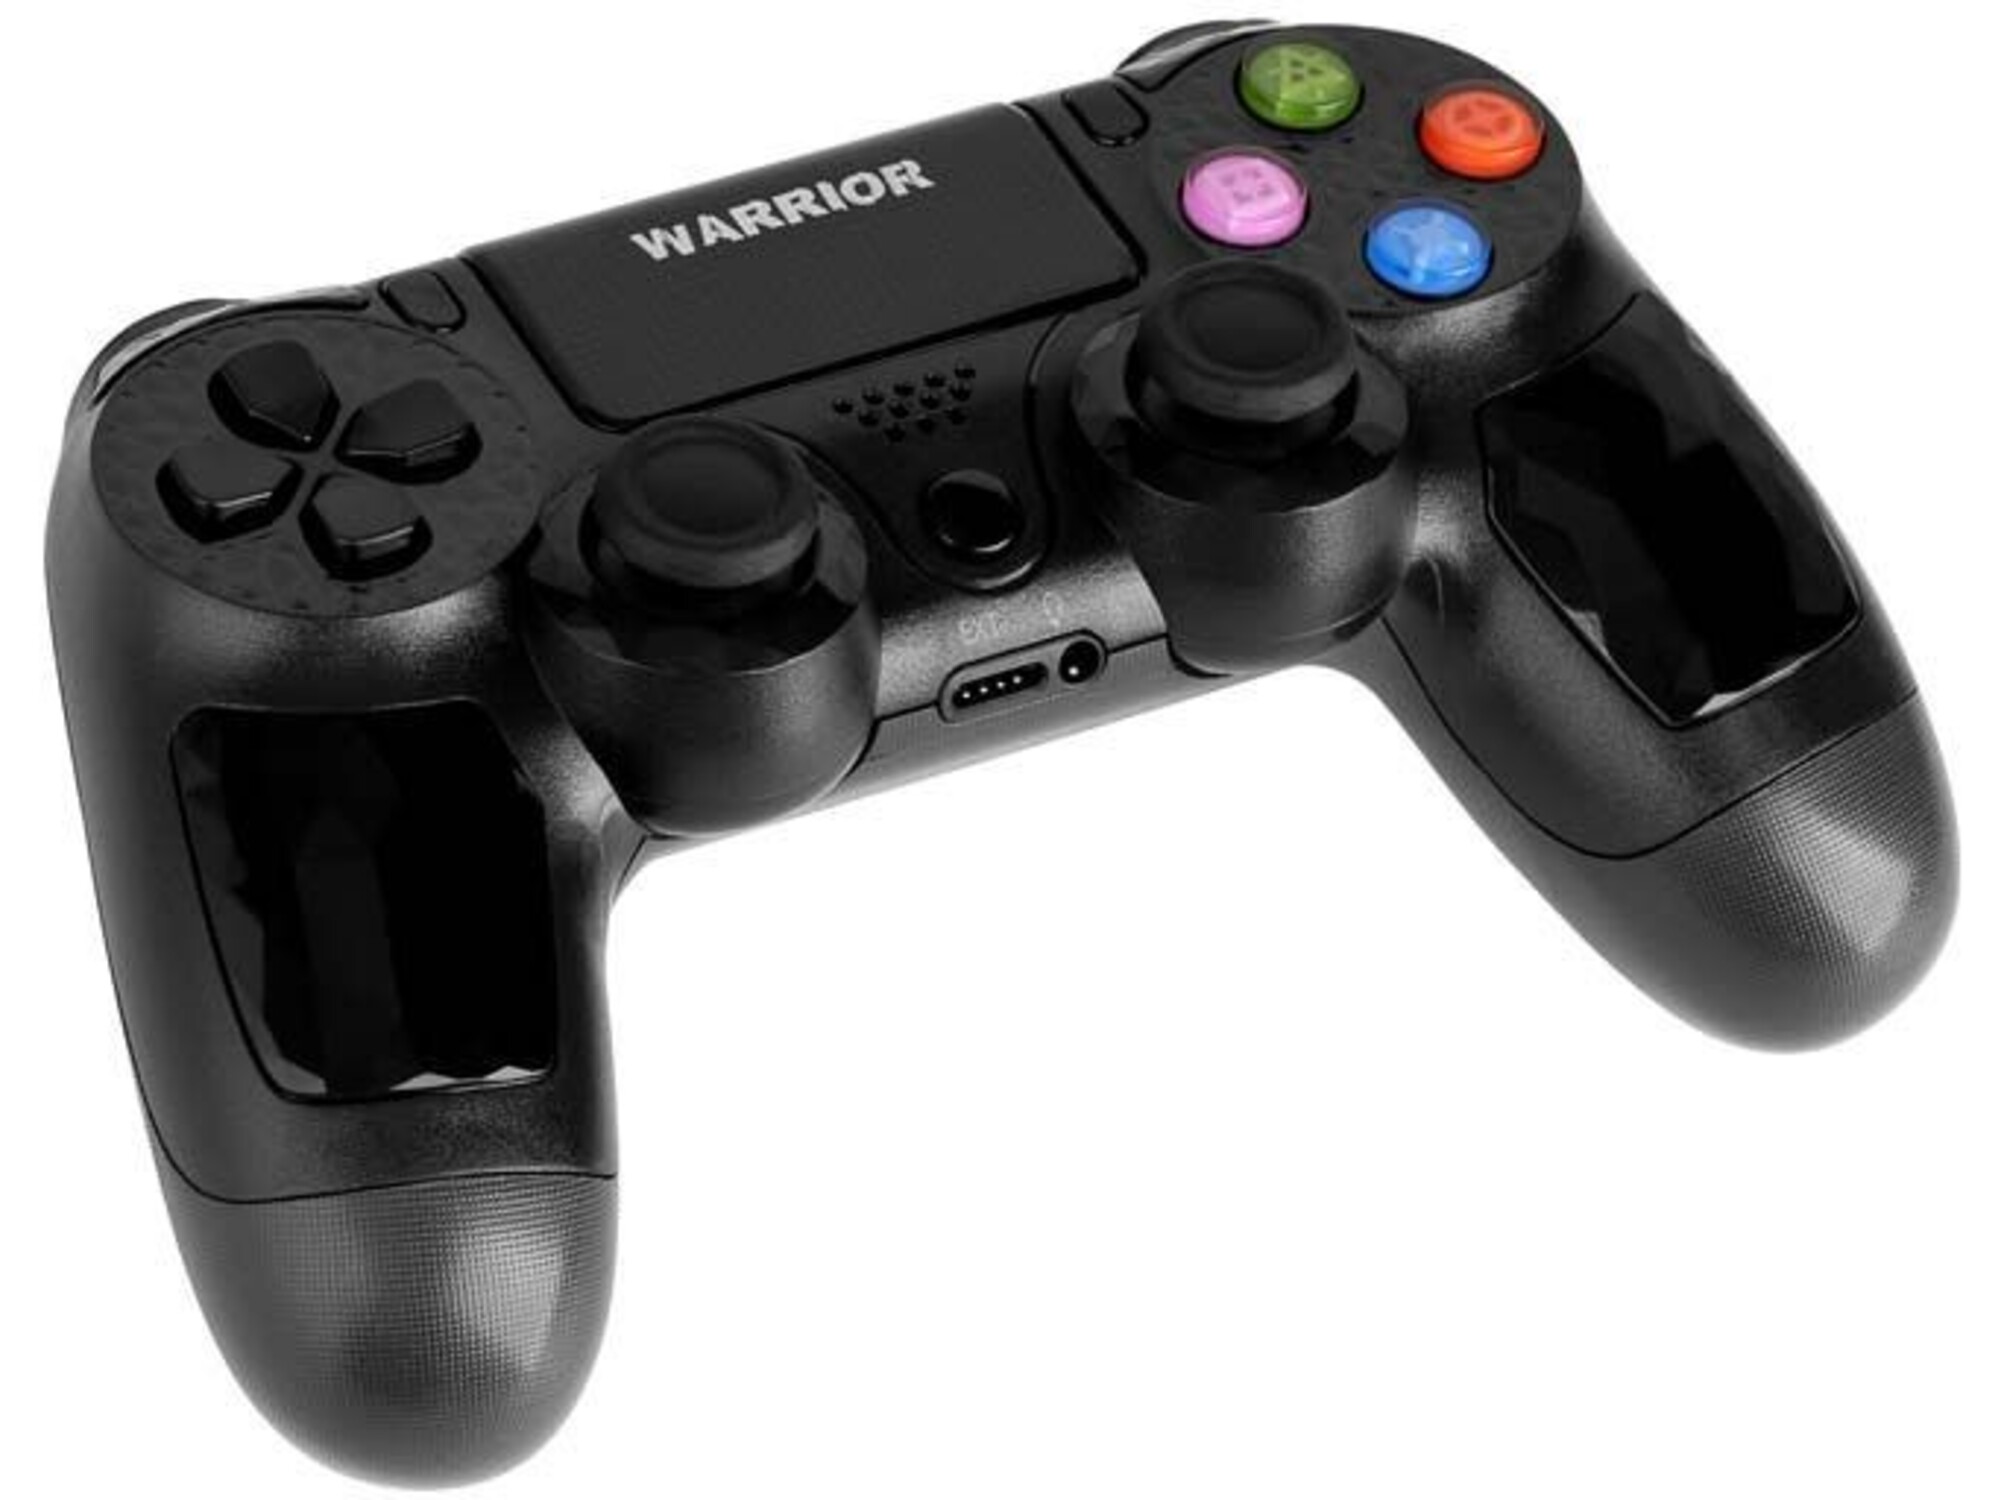 REBEL Warrior igralna konzola za PS4 - PC, bluetooth, Dual-shock, CC-JOY0771